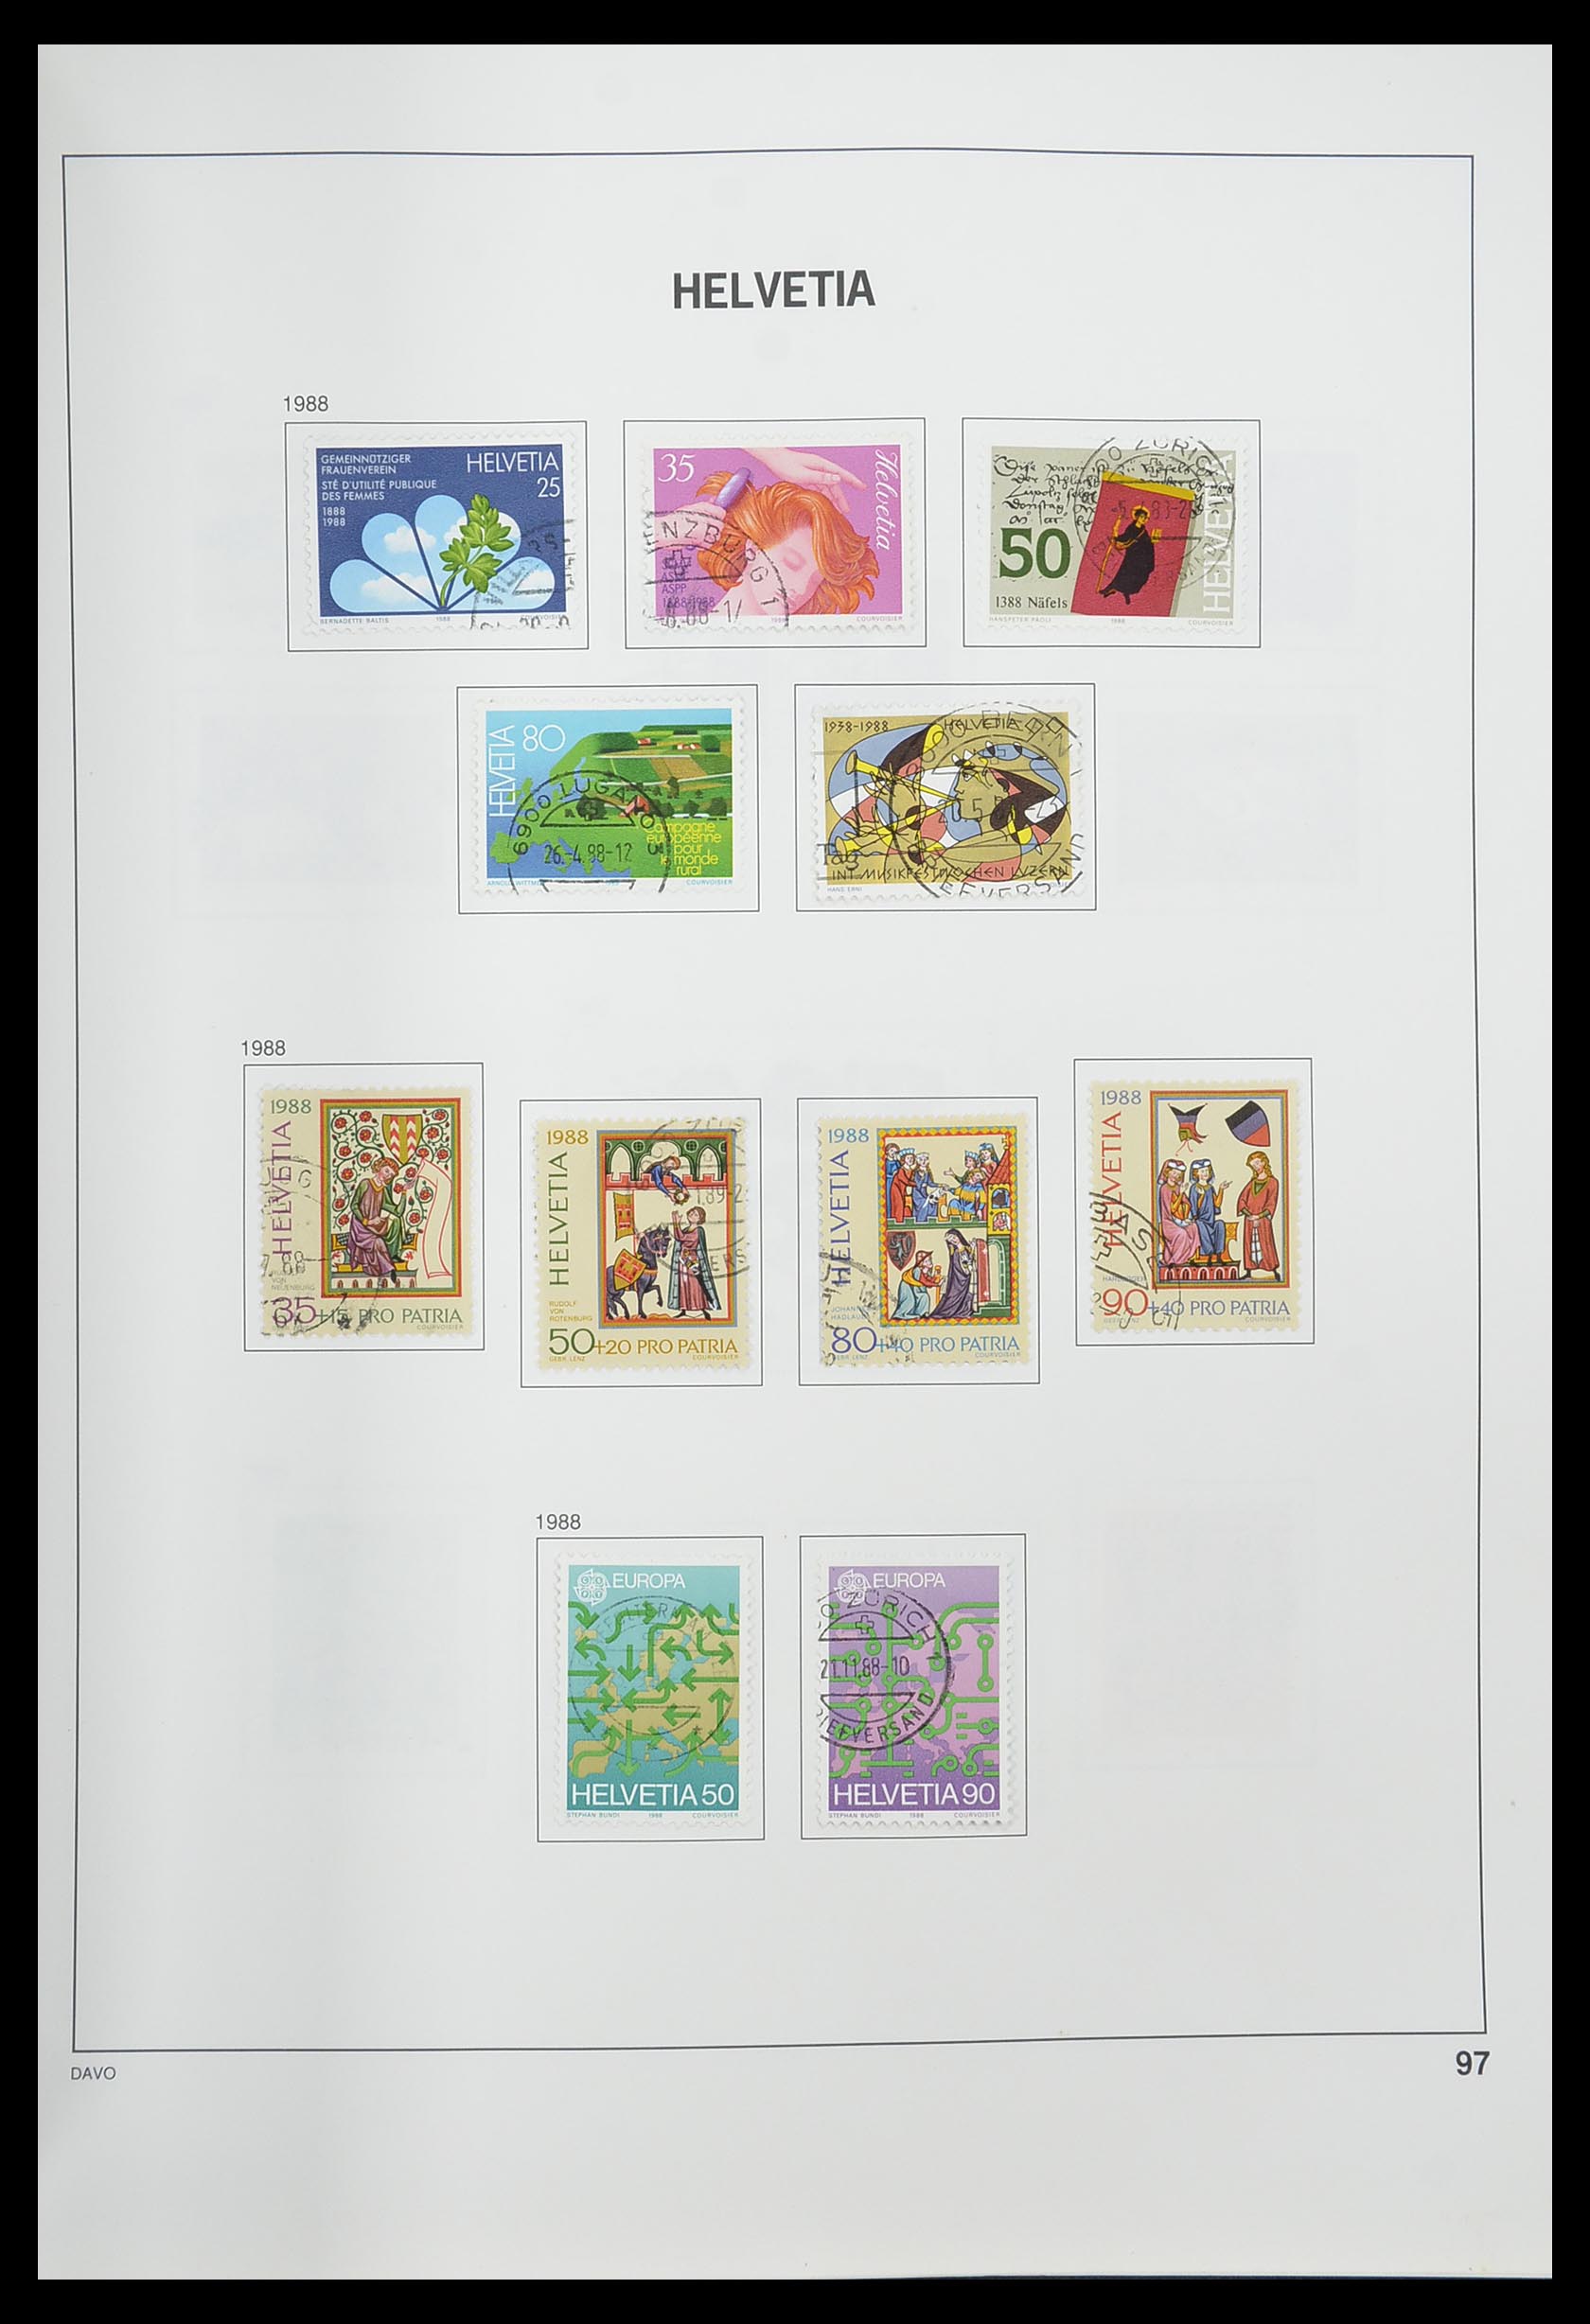 33559 098 - Stamp collection 33559 Switzerland 1850-2000.